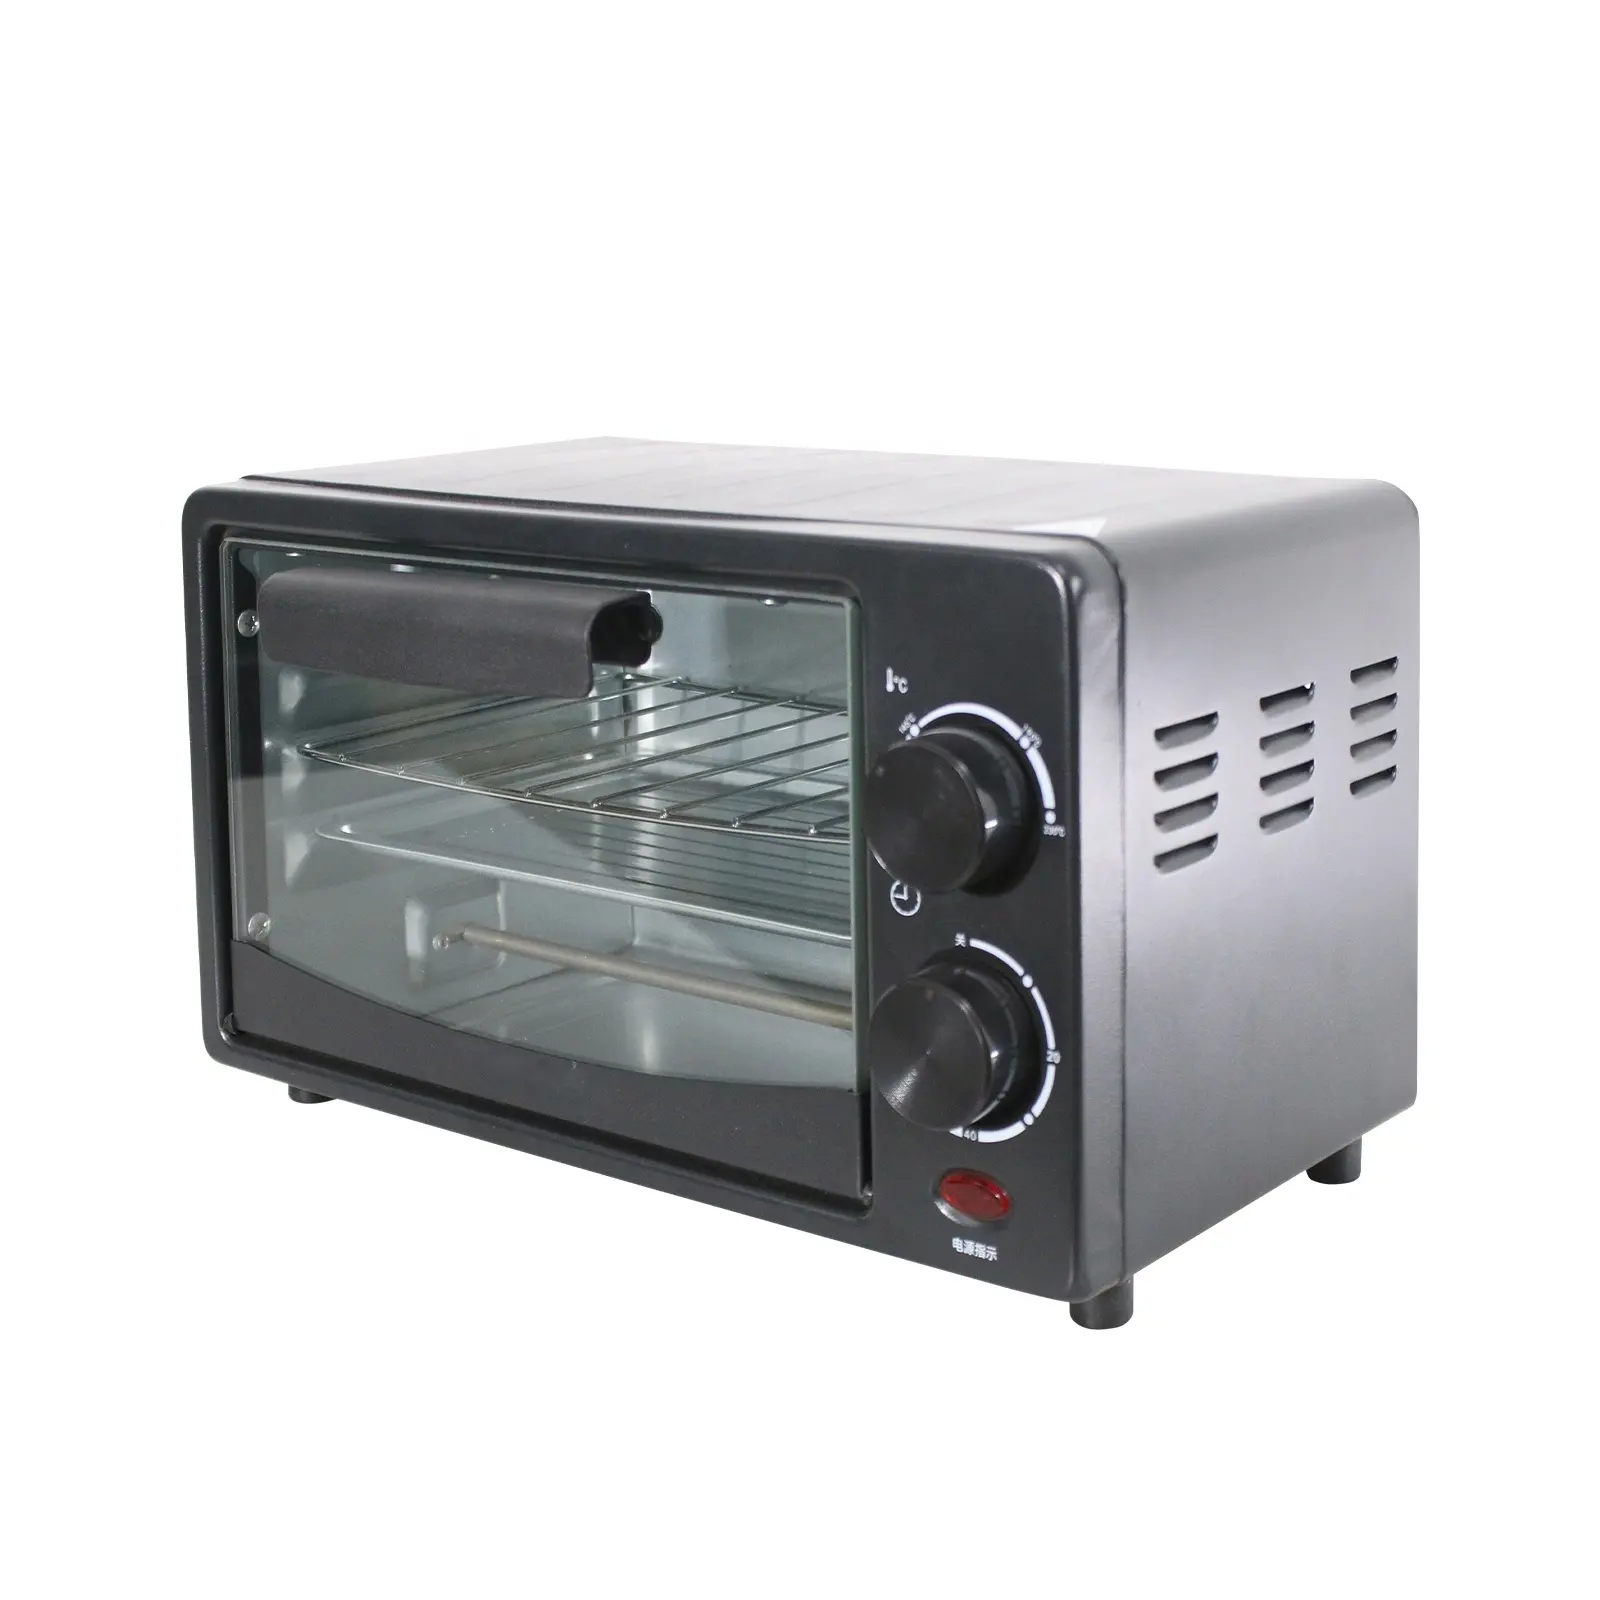 OEM pequena capacidade 7l padaria bancada cozimento torradeira forno elétrico pizza forno